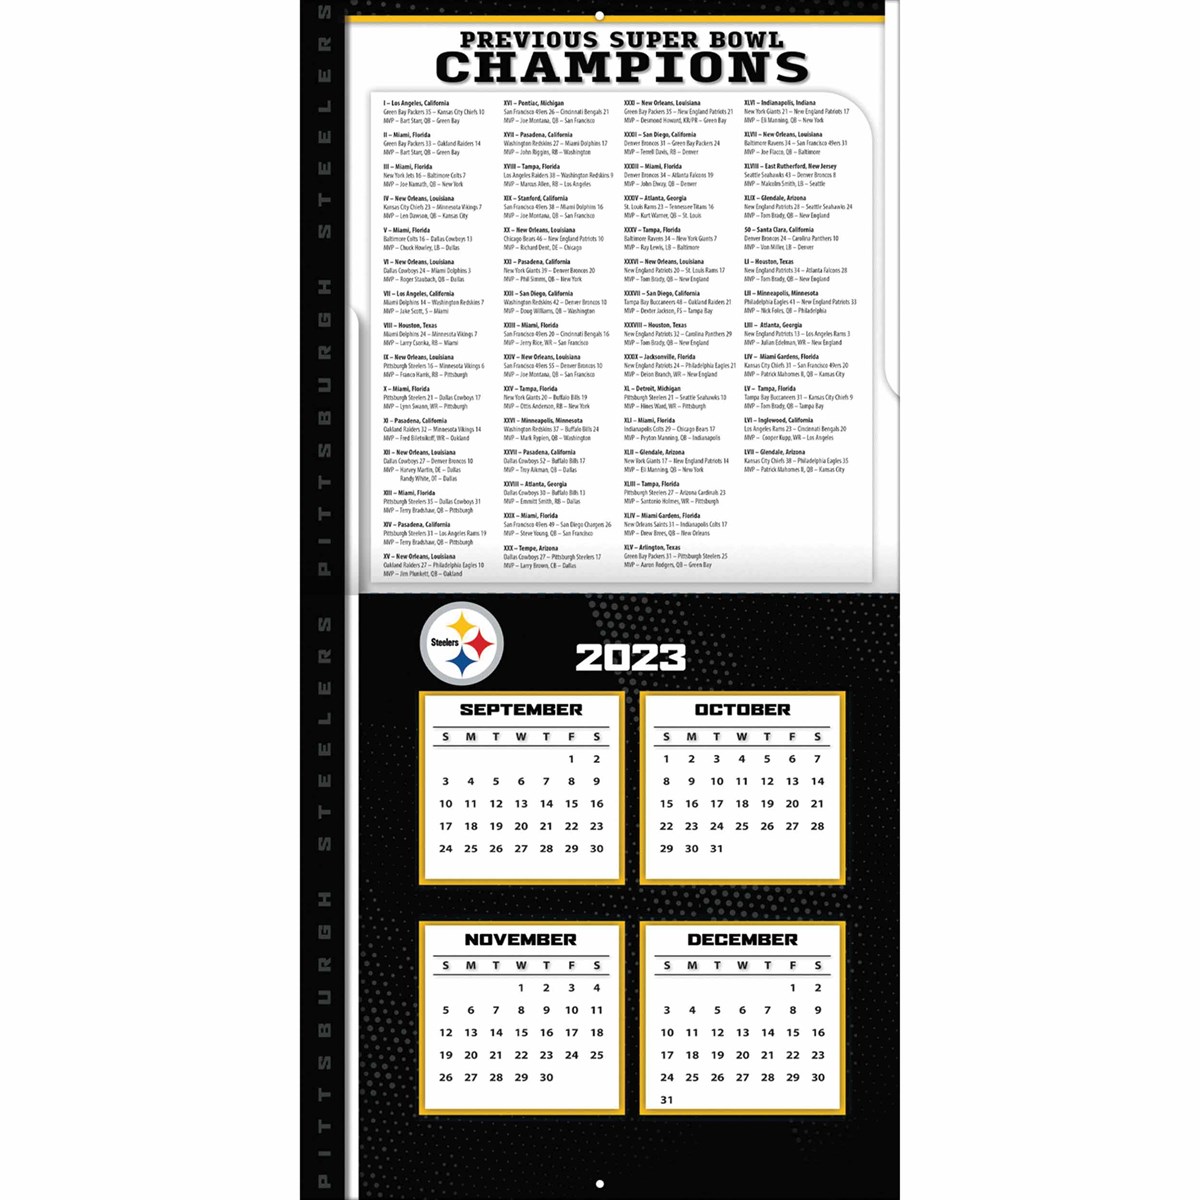 2021 Pittsburgh Steelers Schedule